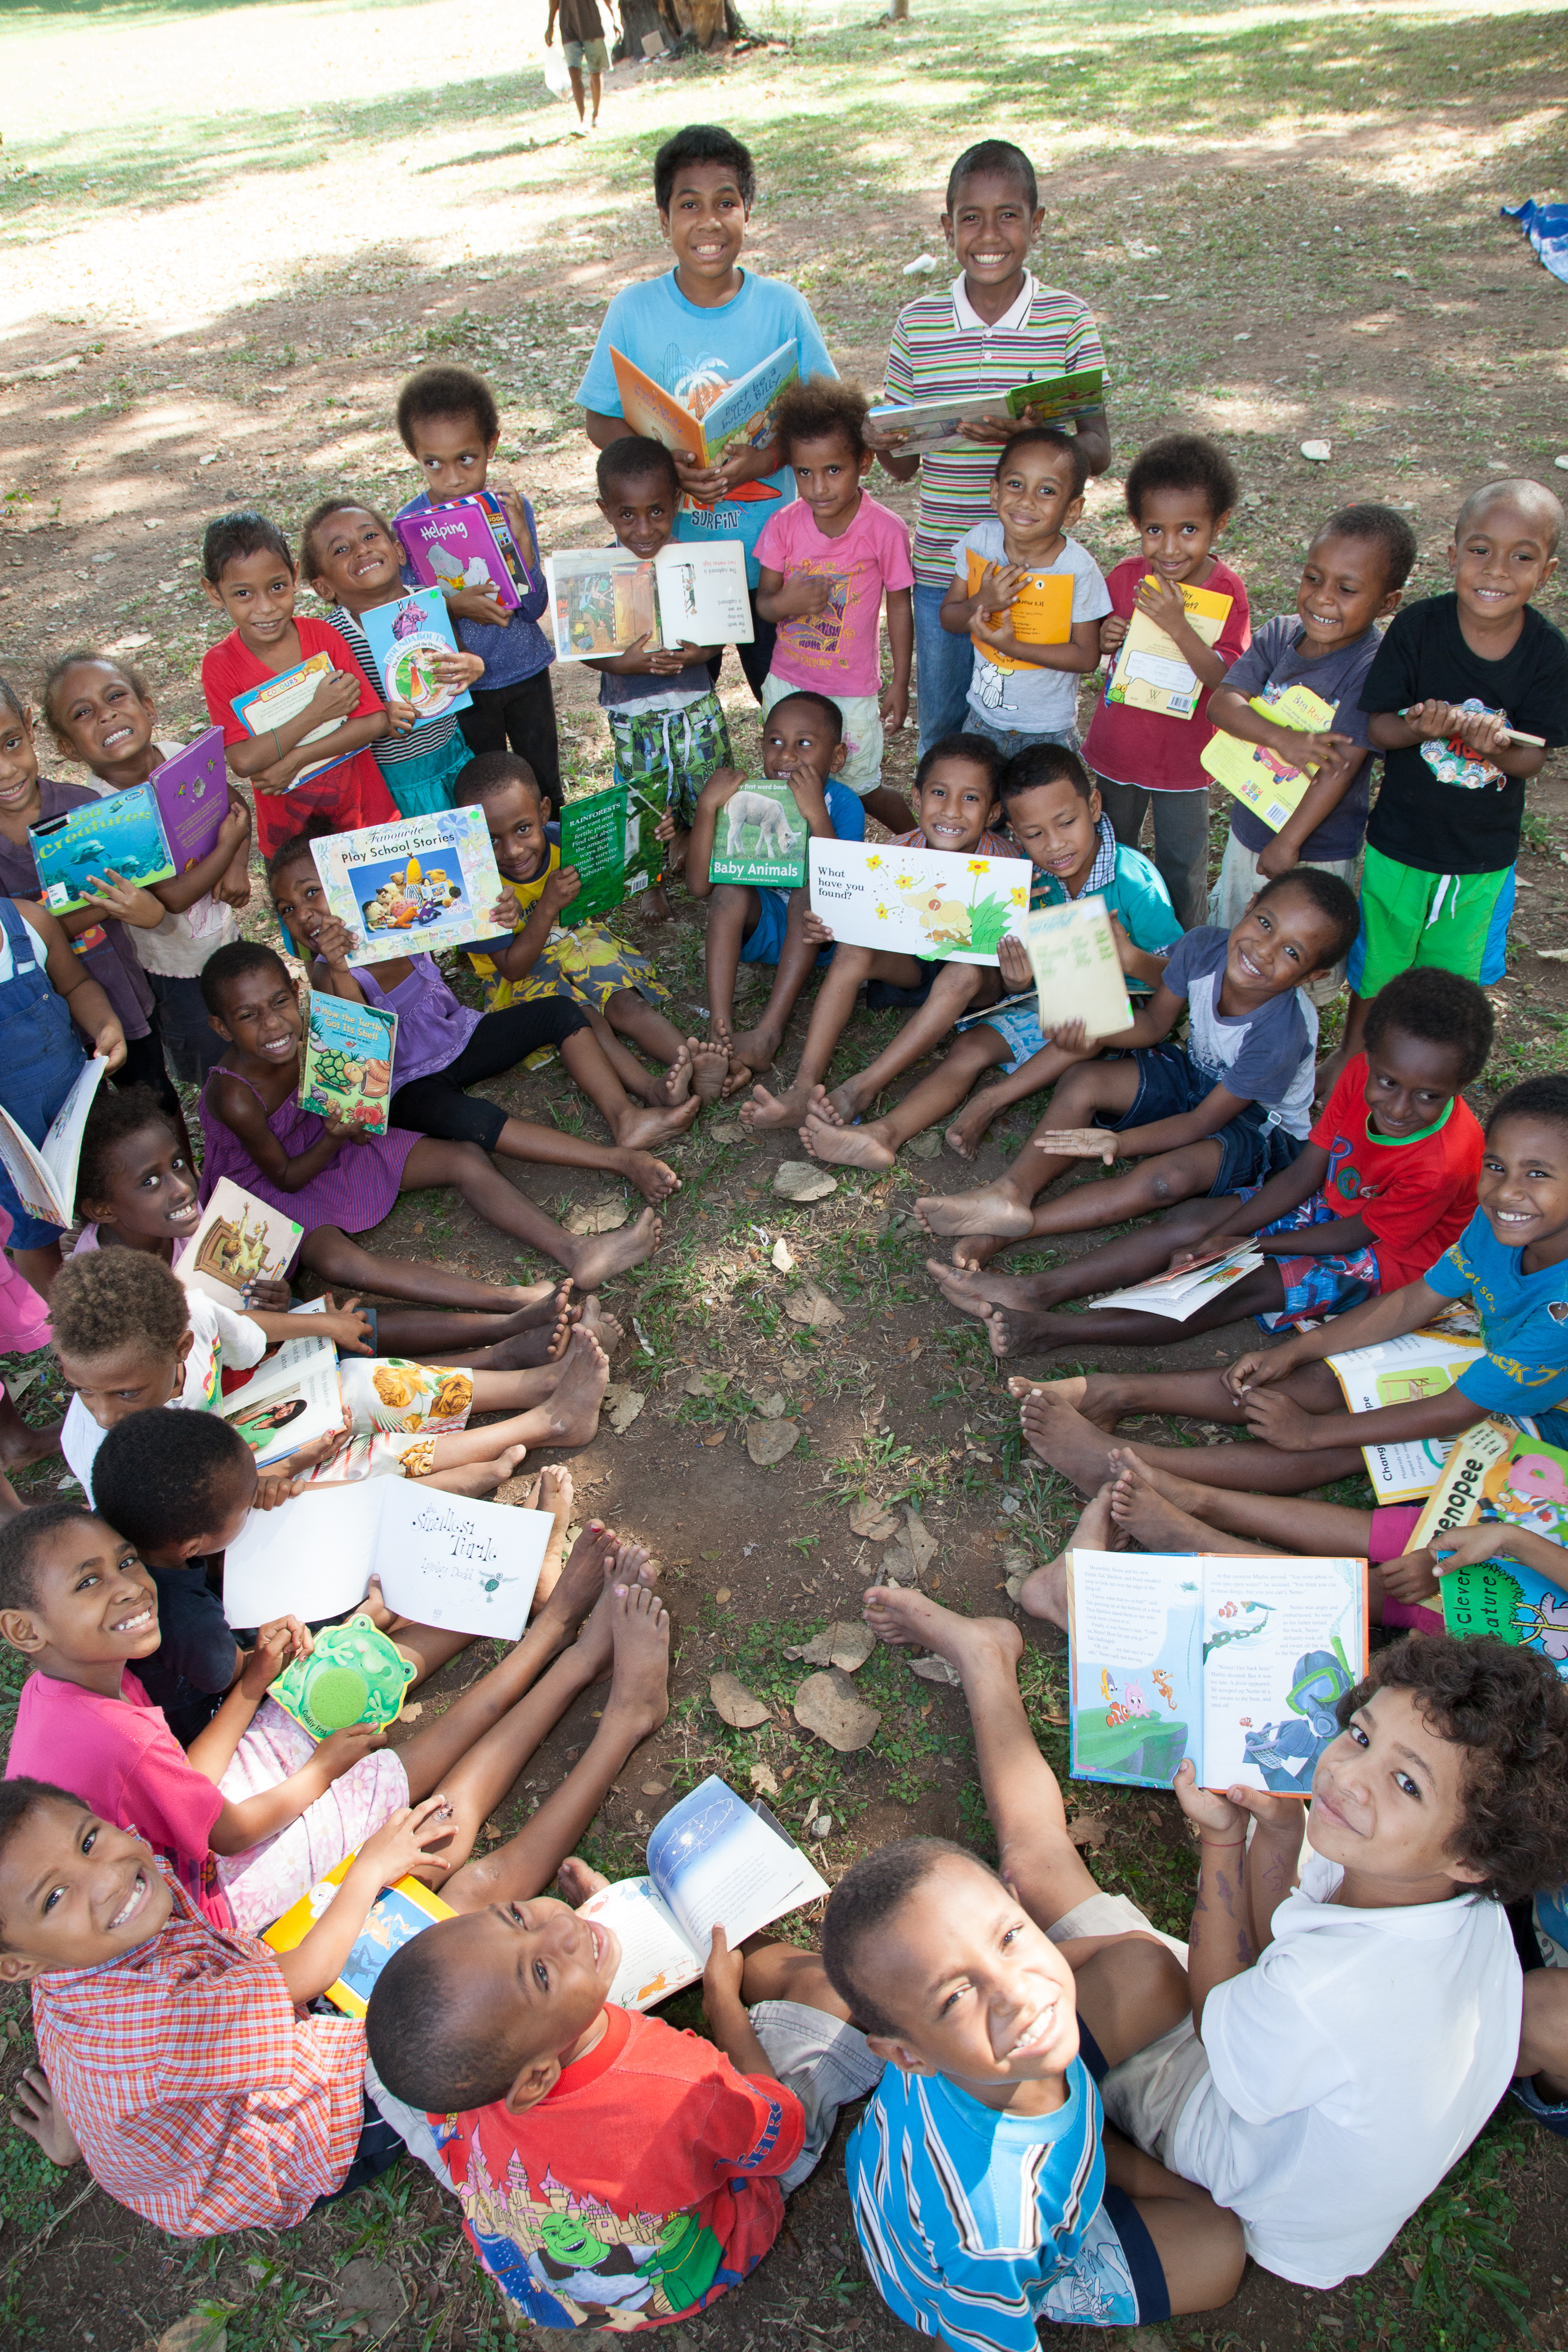 https://upload.wikimedia.org/wikipedia/commons/6/69/Children_at_Buk_bilong_Pikinini_%28books_for_children%29._Port_Moresby%2C_Papua_New_Guinea._%2810682223463%29.jpg